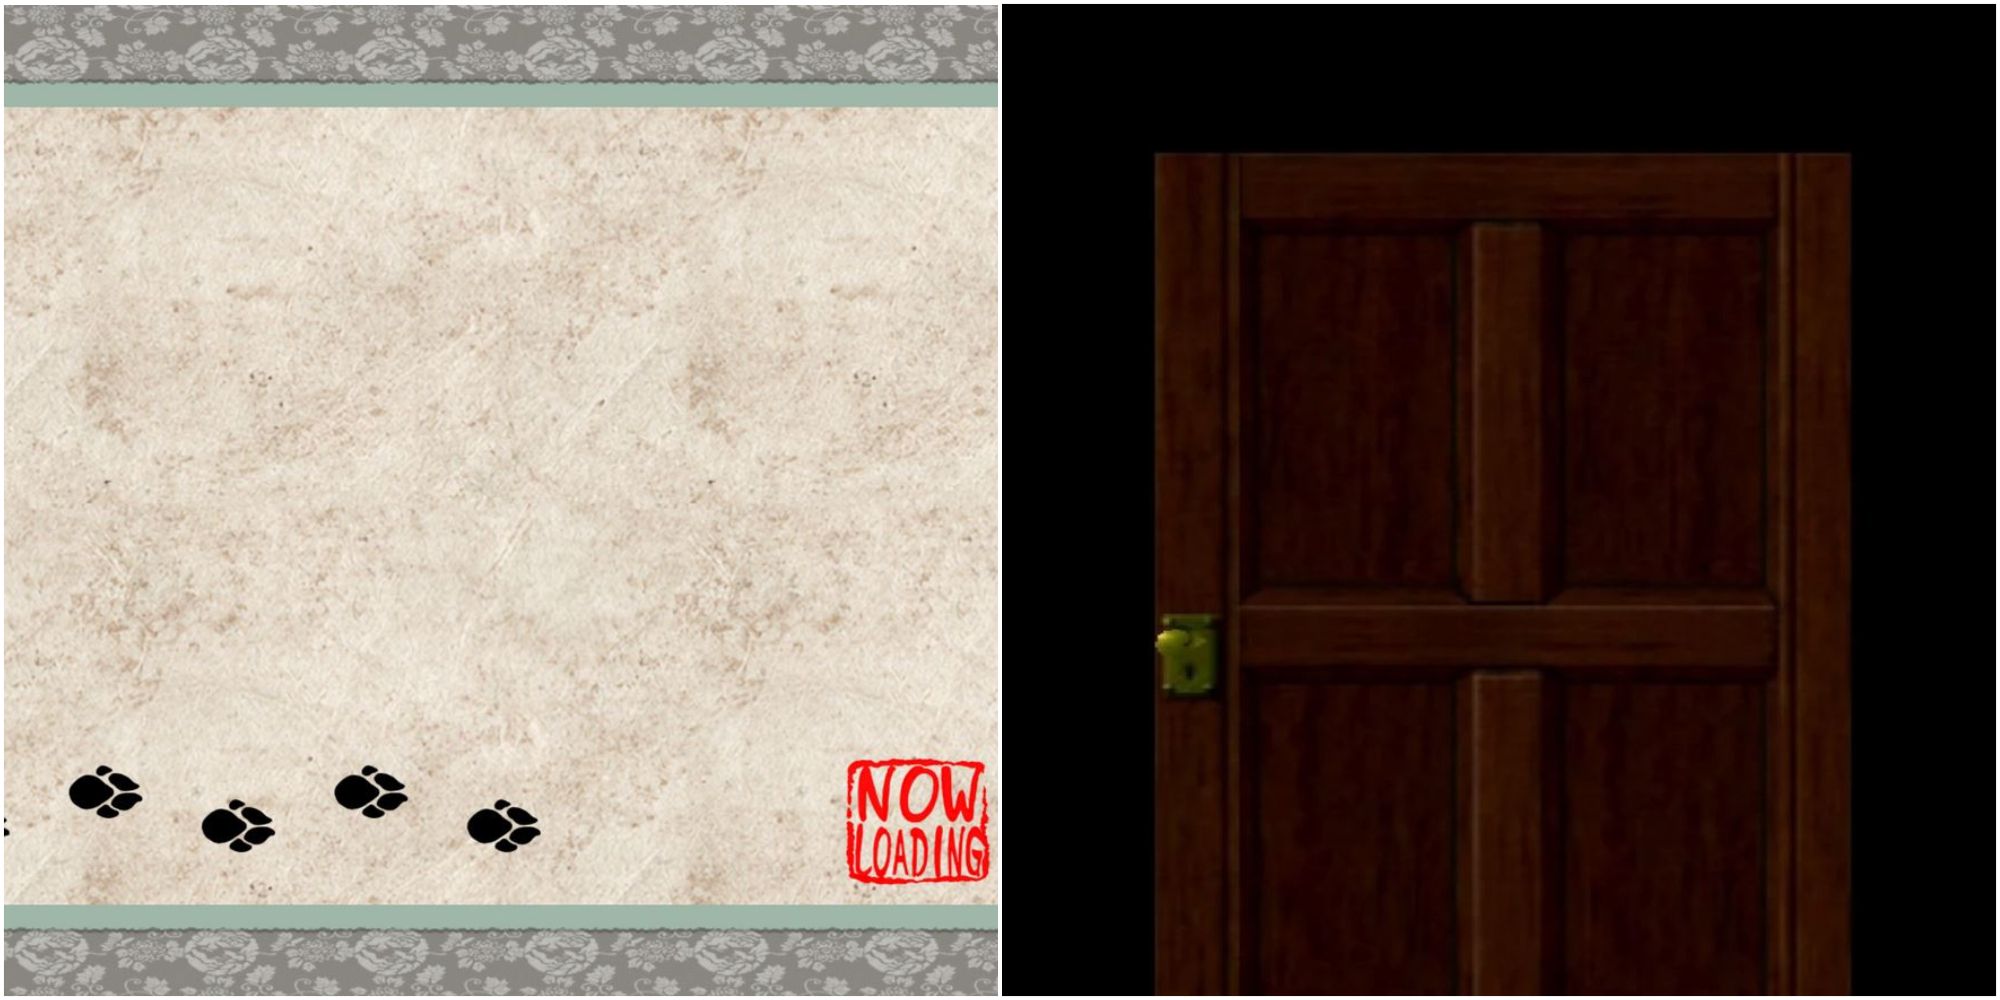 Split Image of Okami loading screen and resident evil door